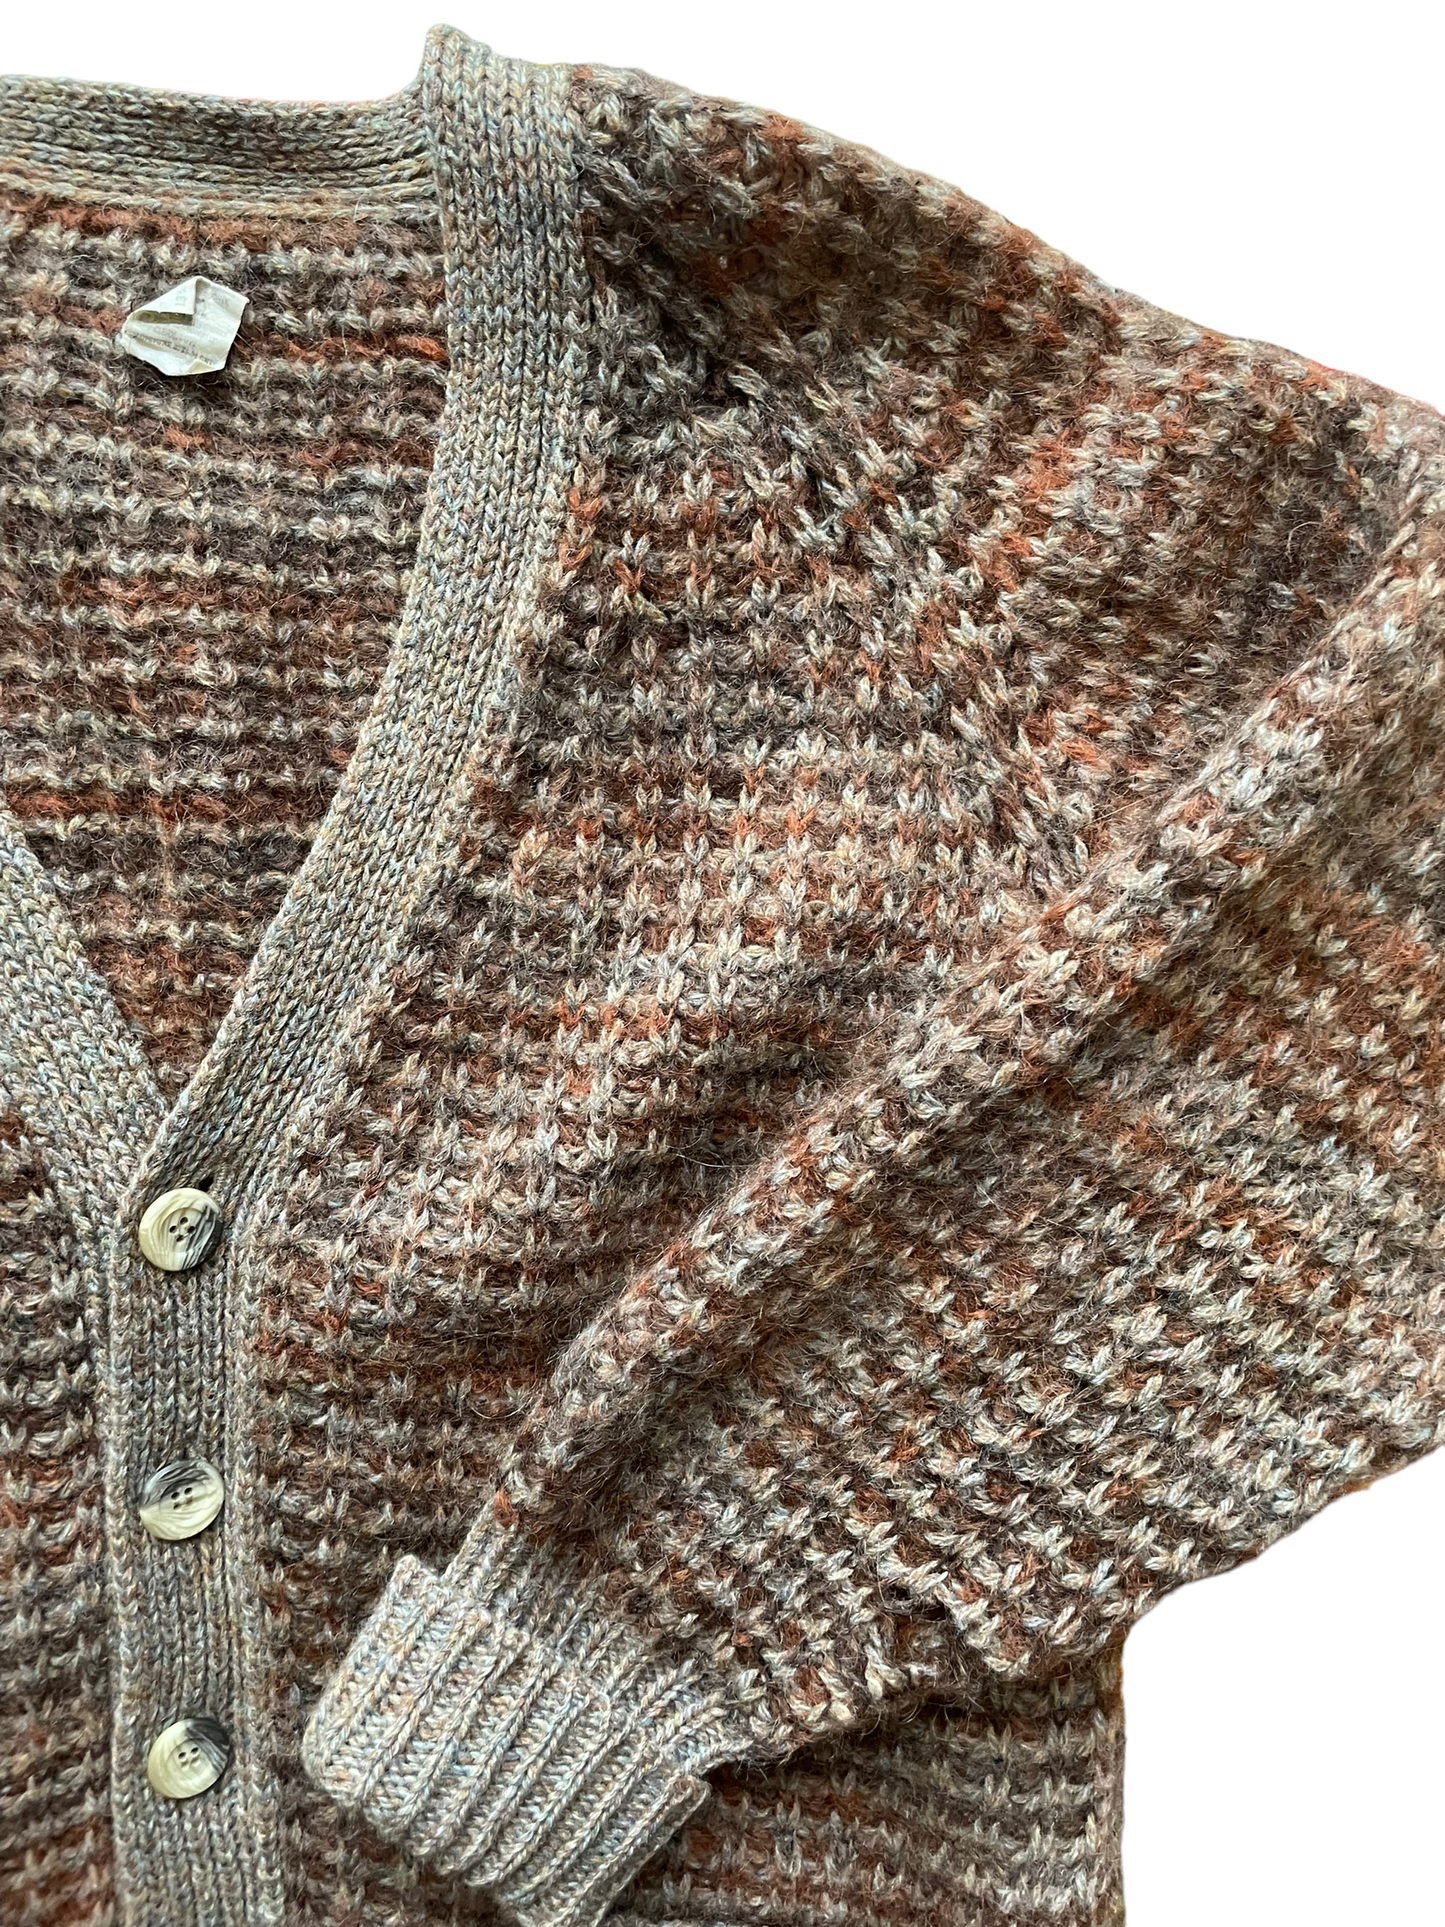 Vintage 1960s Shetland Wool Grampa Cardigan |  Barn Owl Vintage | Seattle Vintage Sweaters Front left side view. Hole visible on left sleeve.